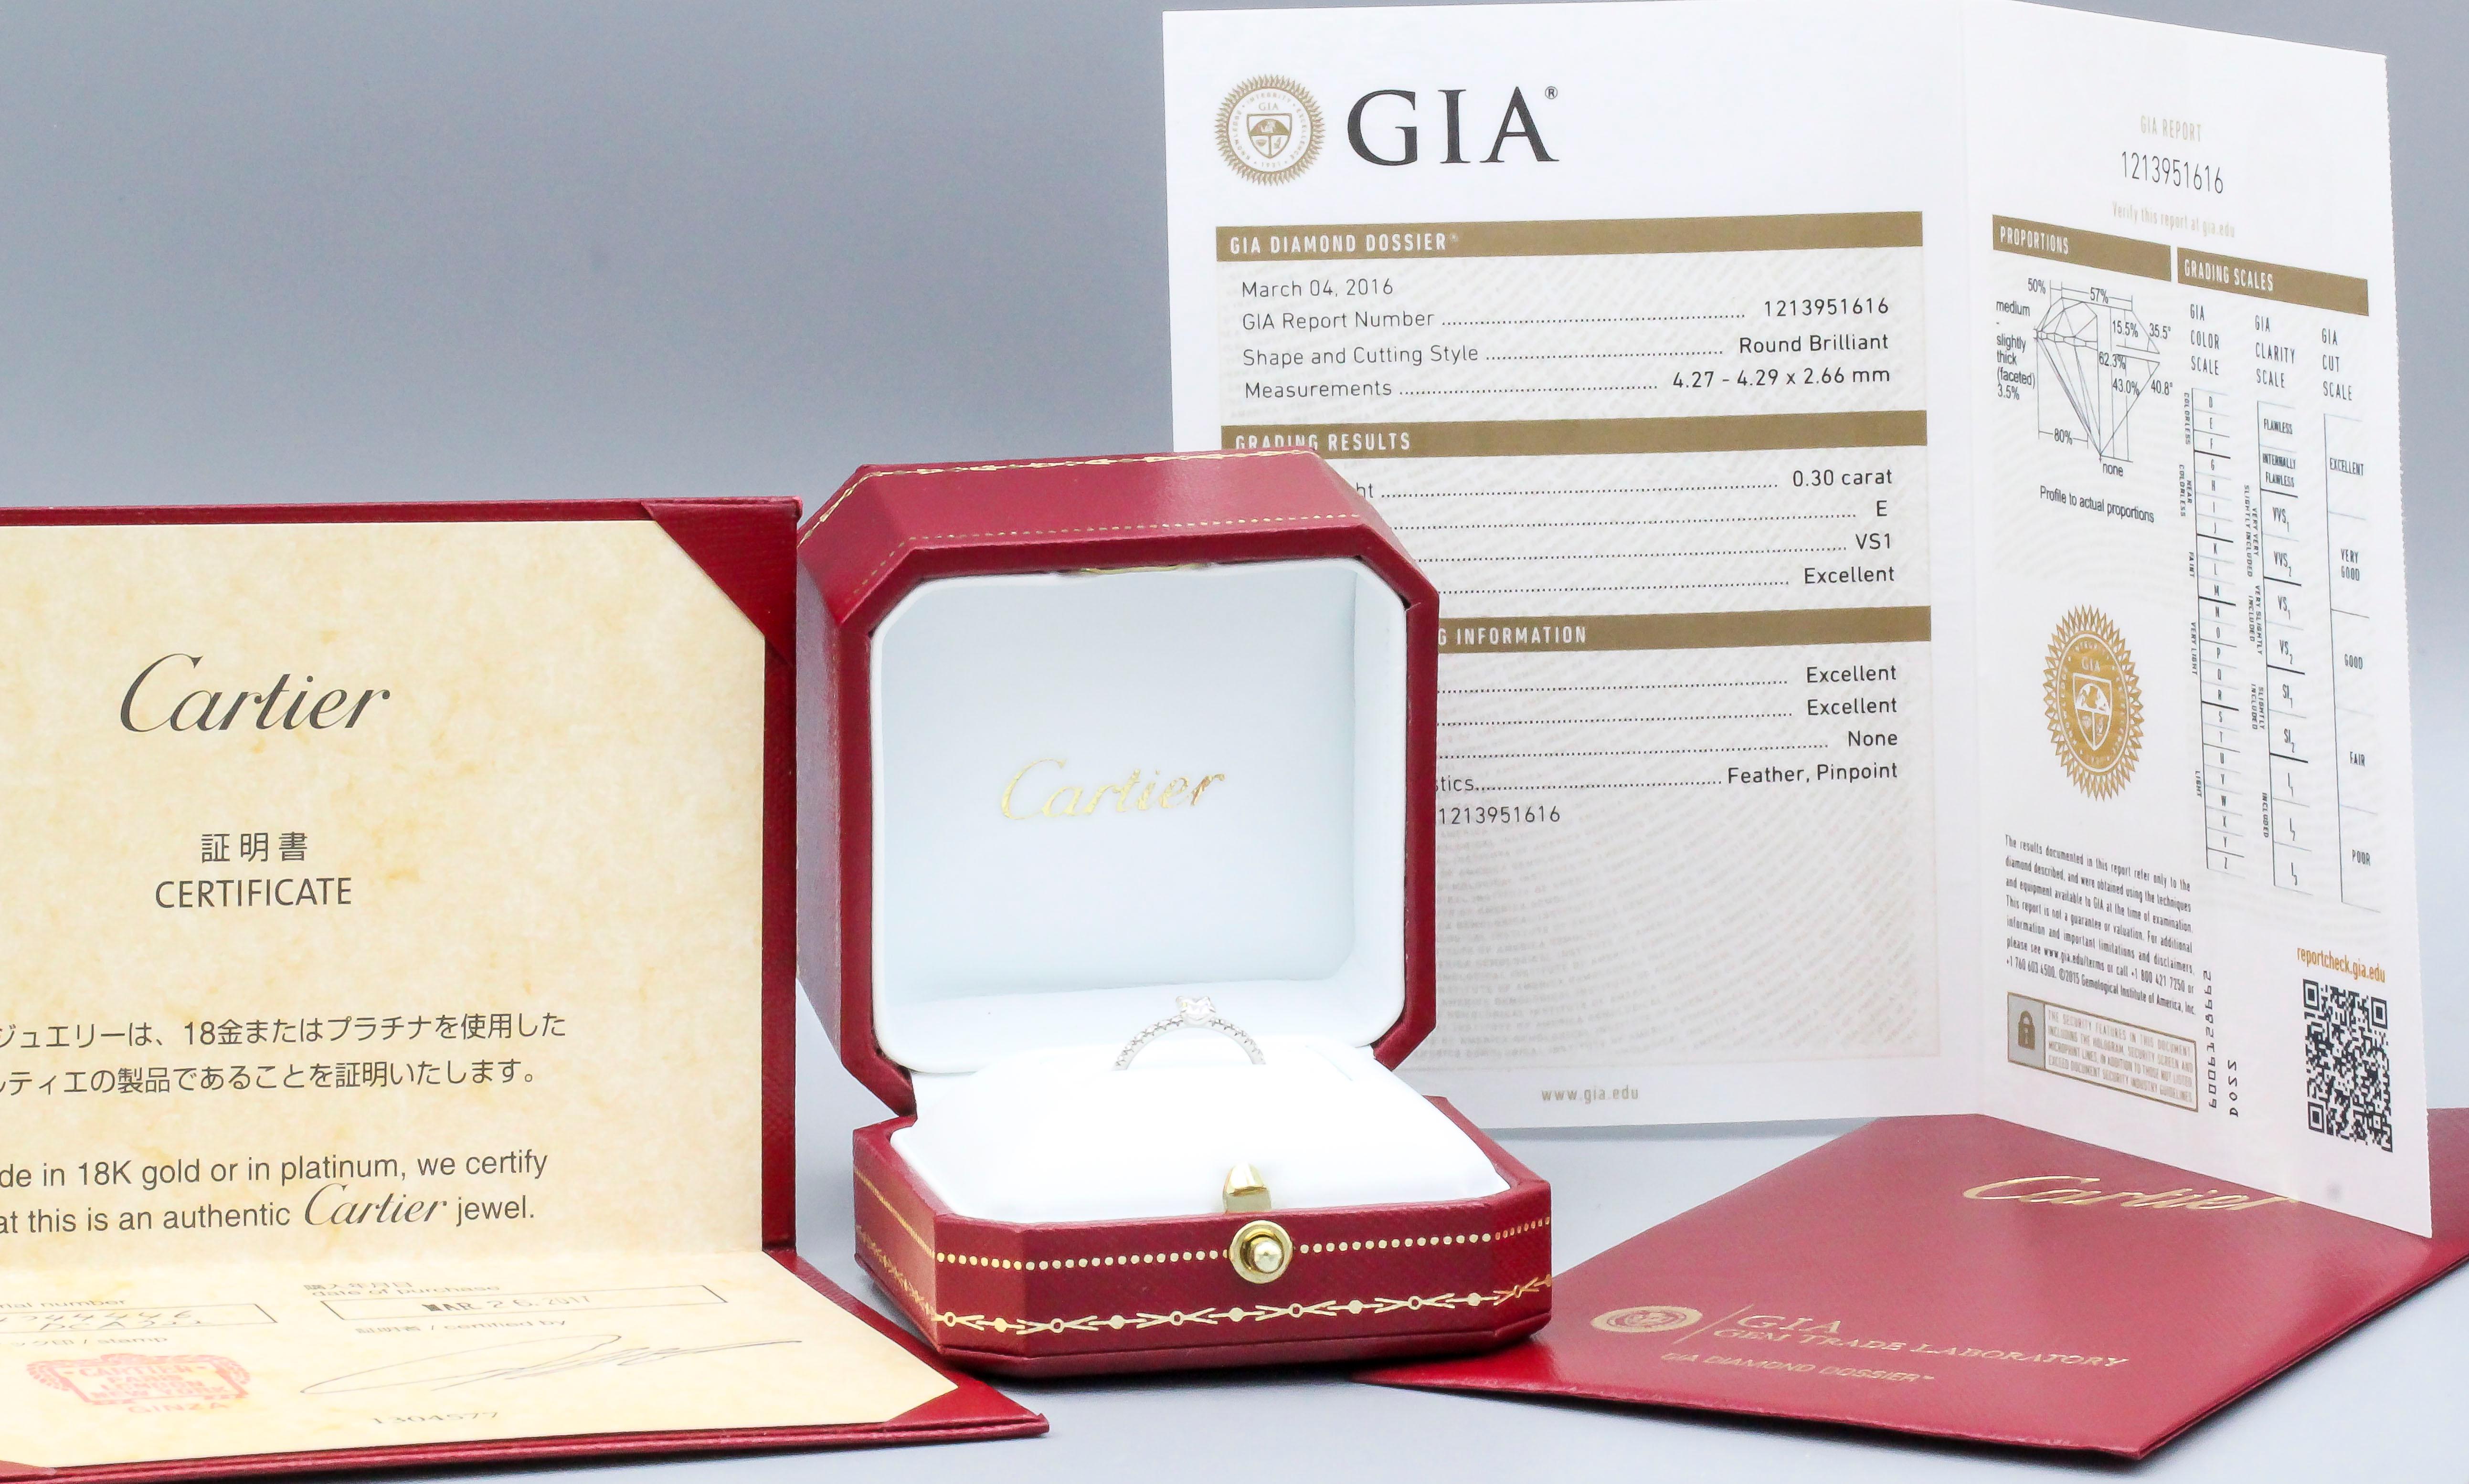 Brilliant Cut Cartier .30 Carat E VS1 Diamond and Platinum Engagement Ring with GIA Report